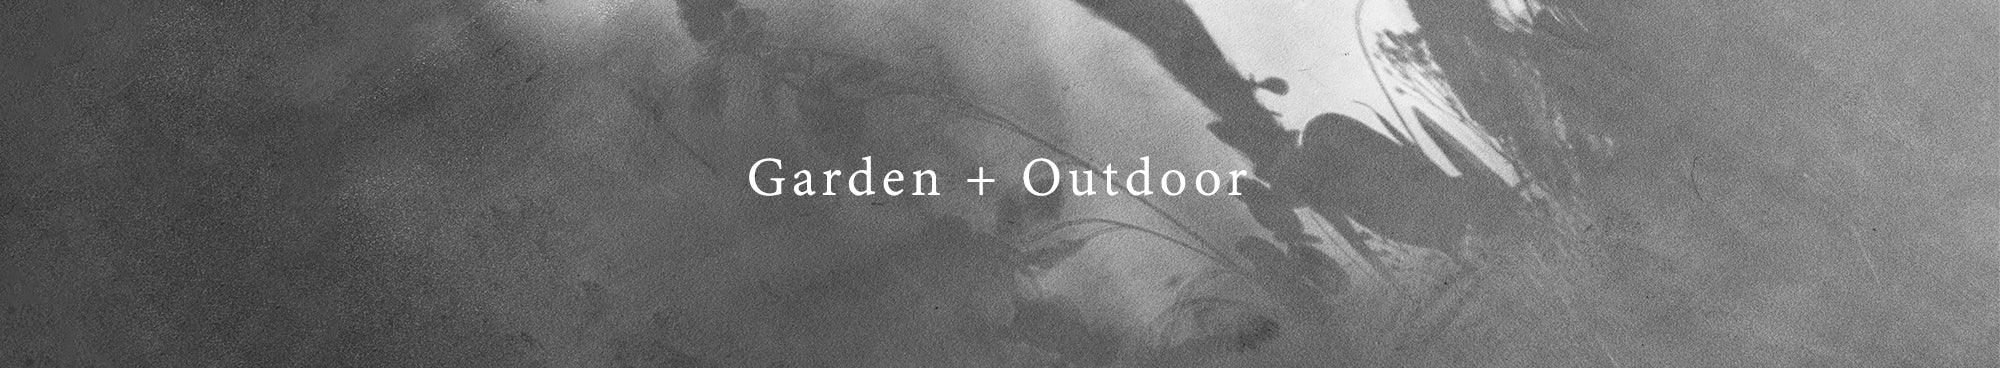 Garden + Outdoor